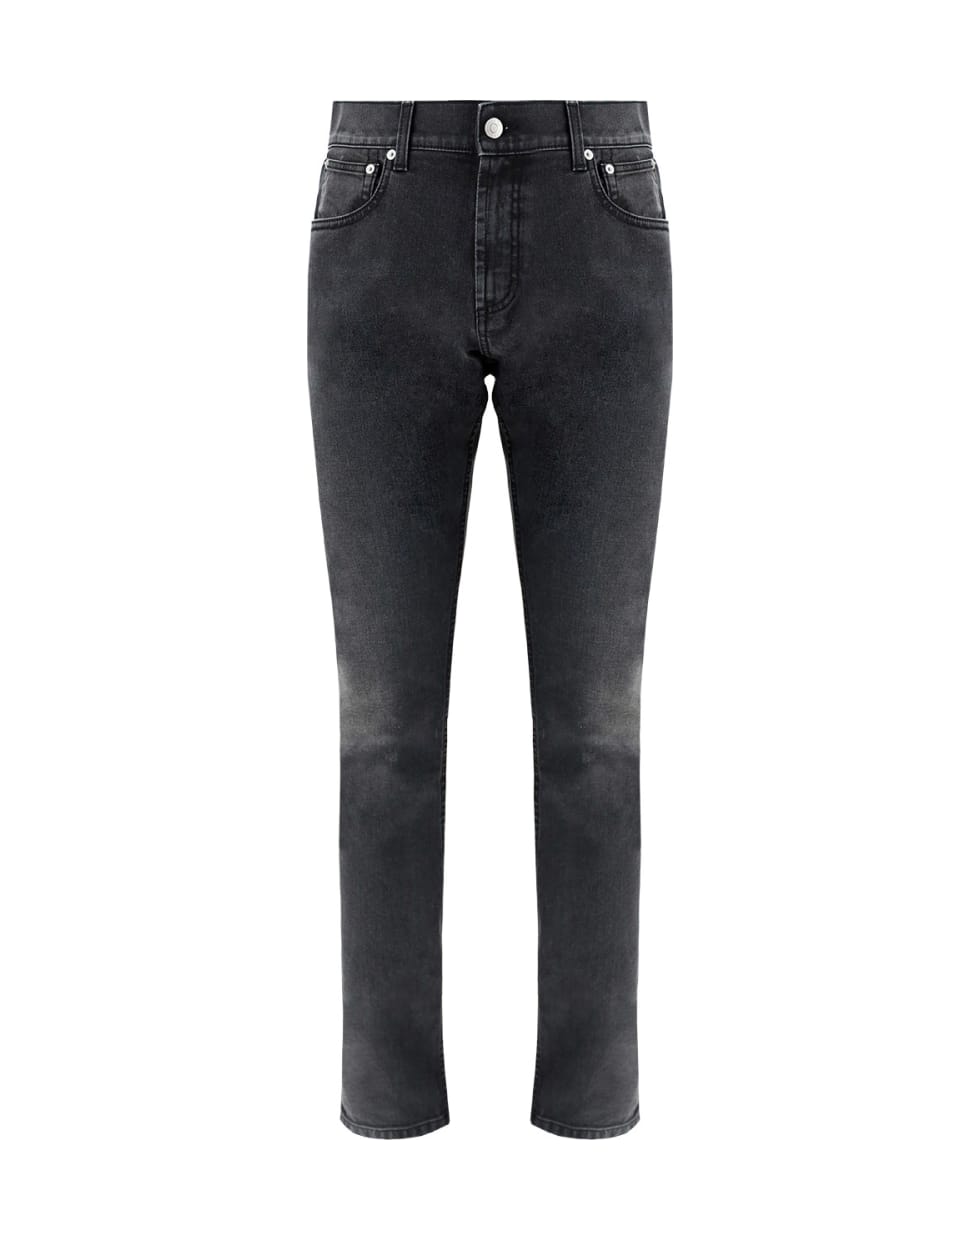 Alexander McQueen Jeans - Black washed